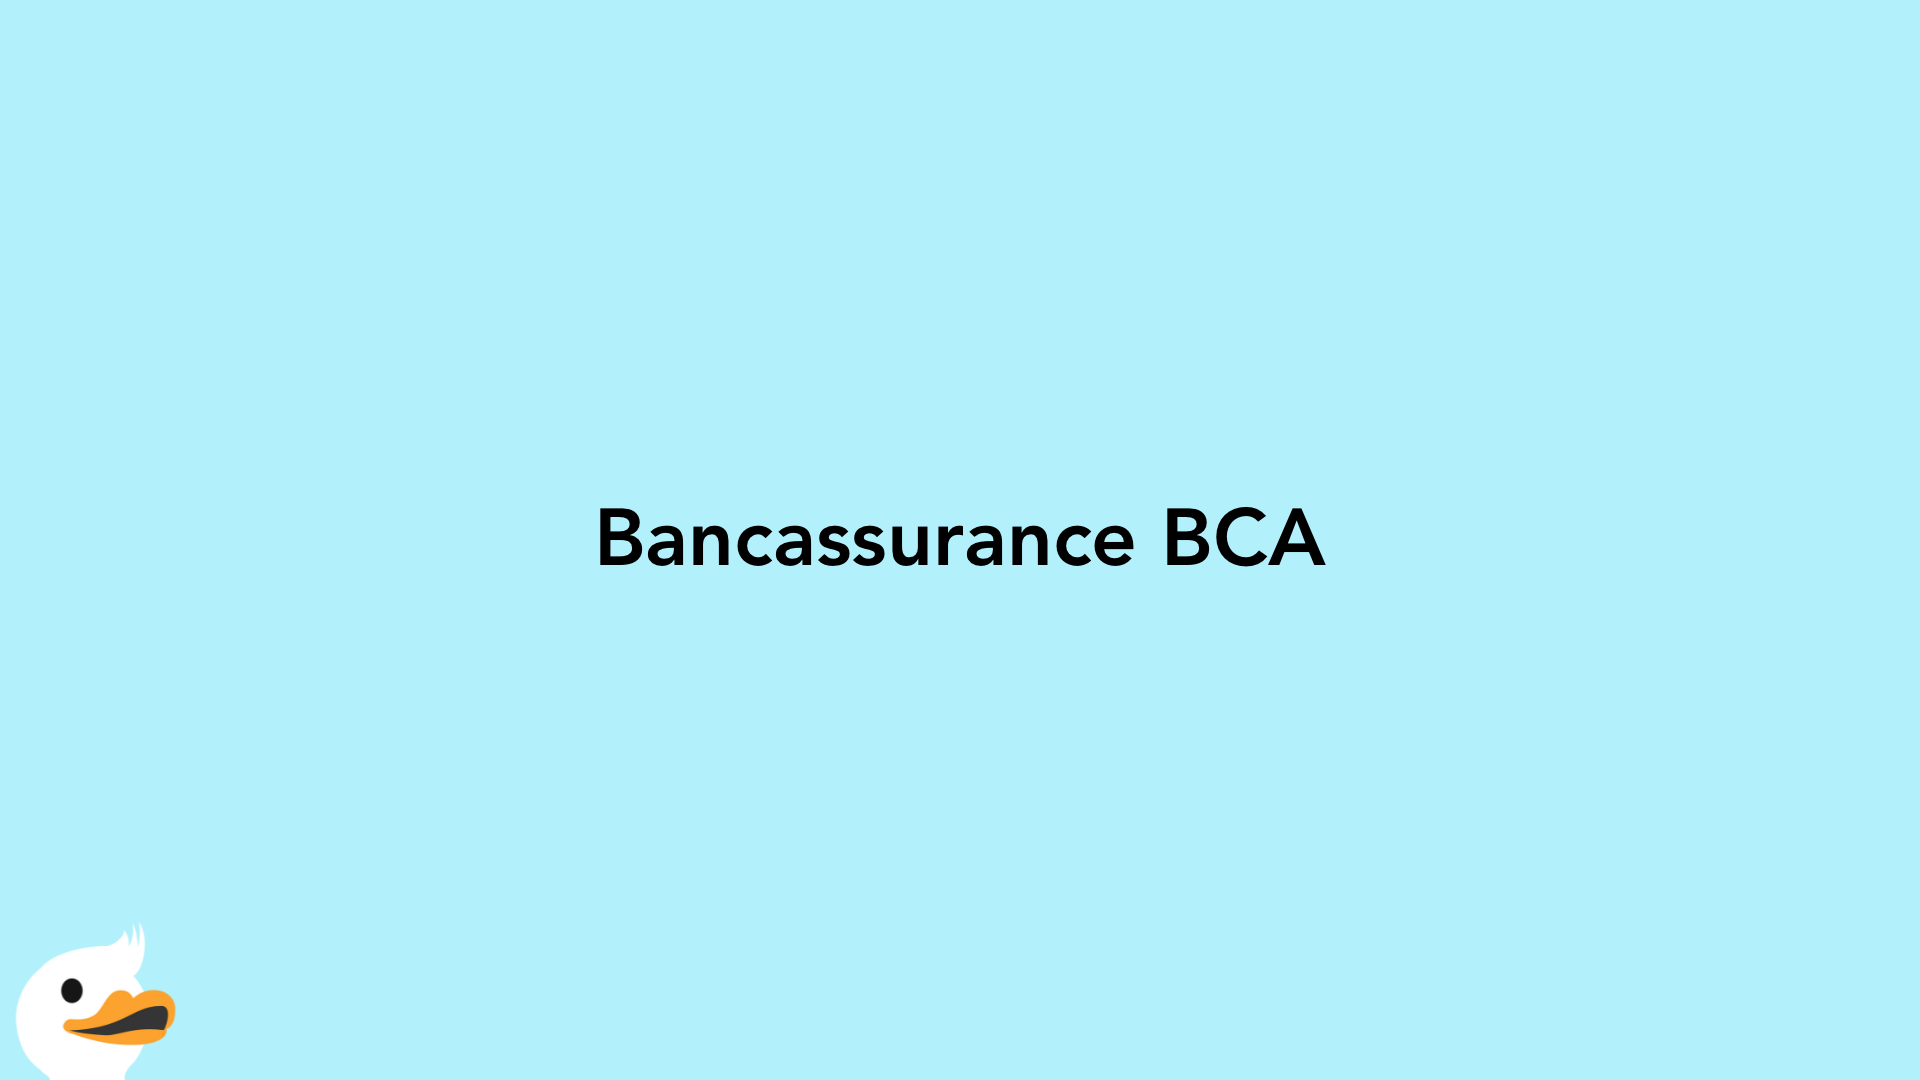 Bancassurance BCA